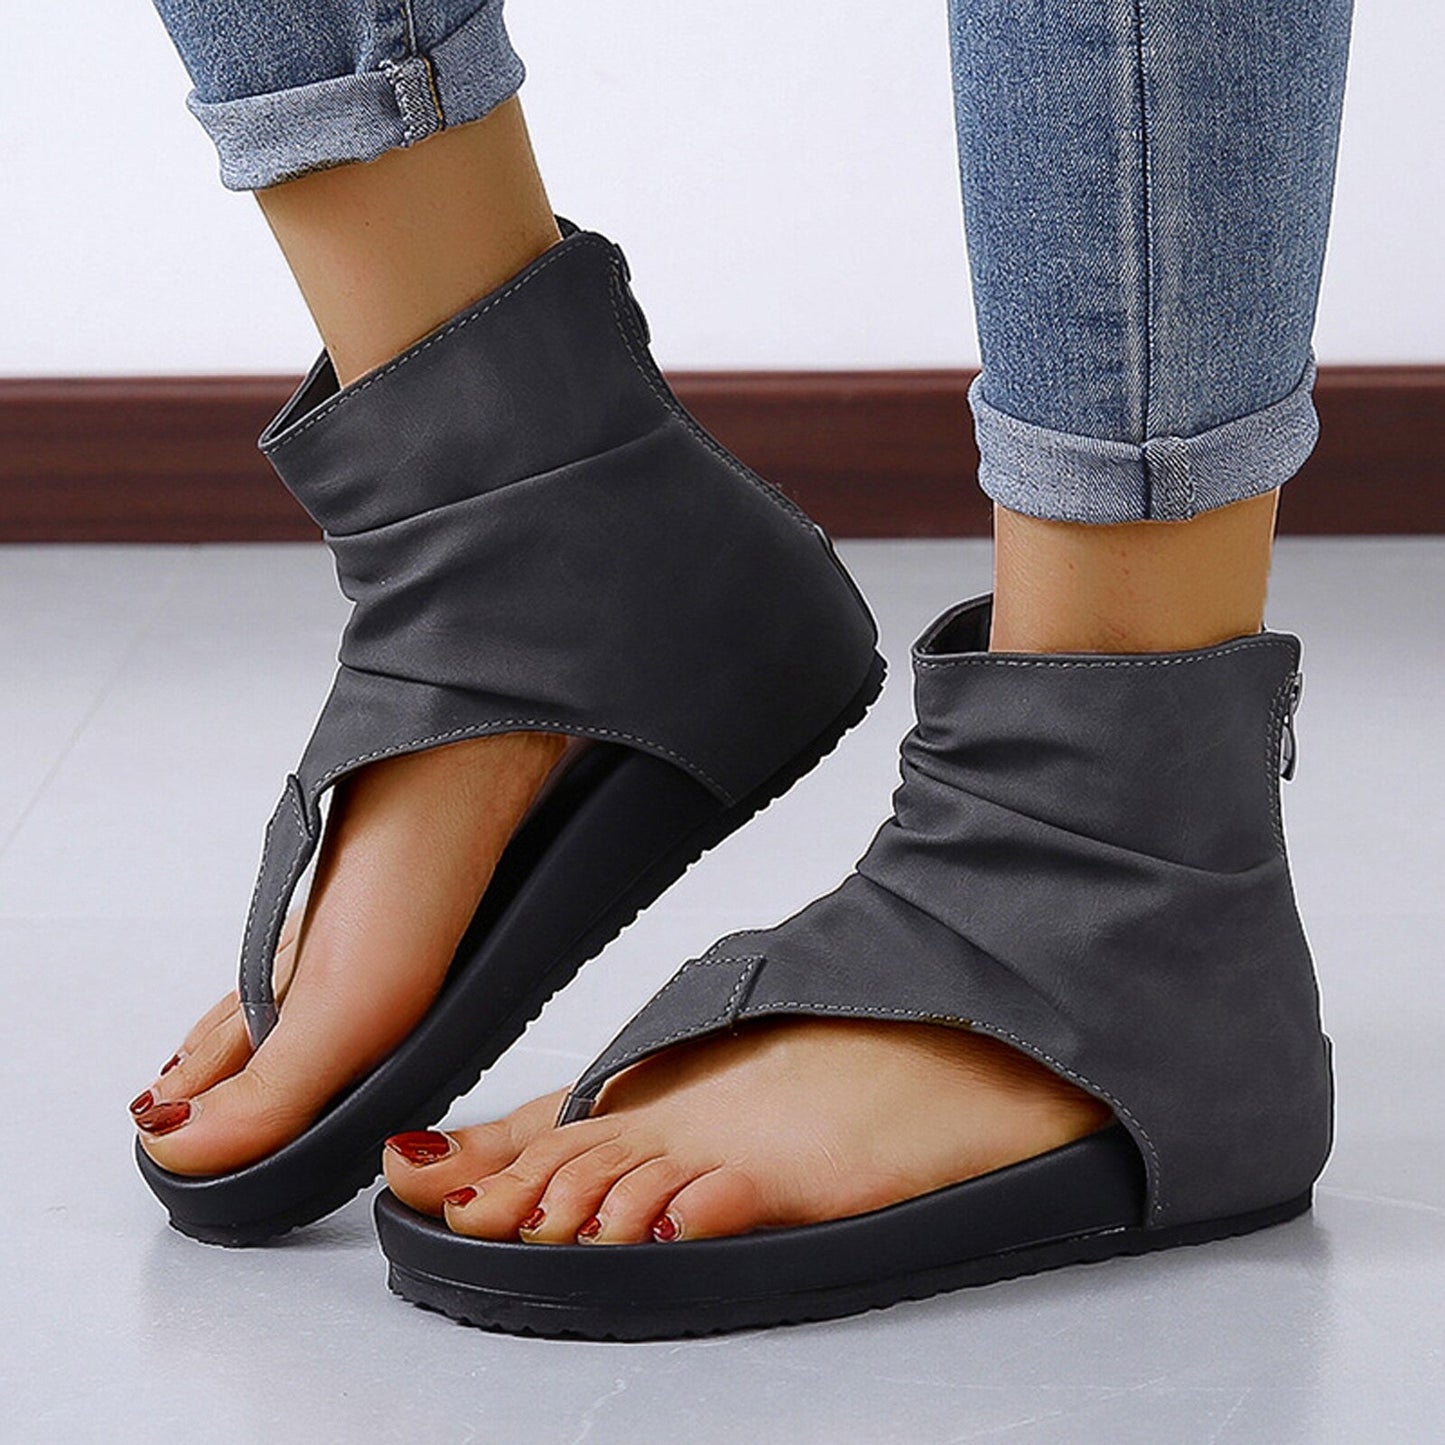 Summer Flat Women Sandals Suede Open Toe Ladies Beach Sandals Roman Zipper Female Shoes Big Size Flip Casual Beach Sandals 2021